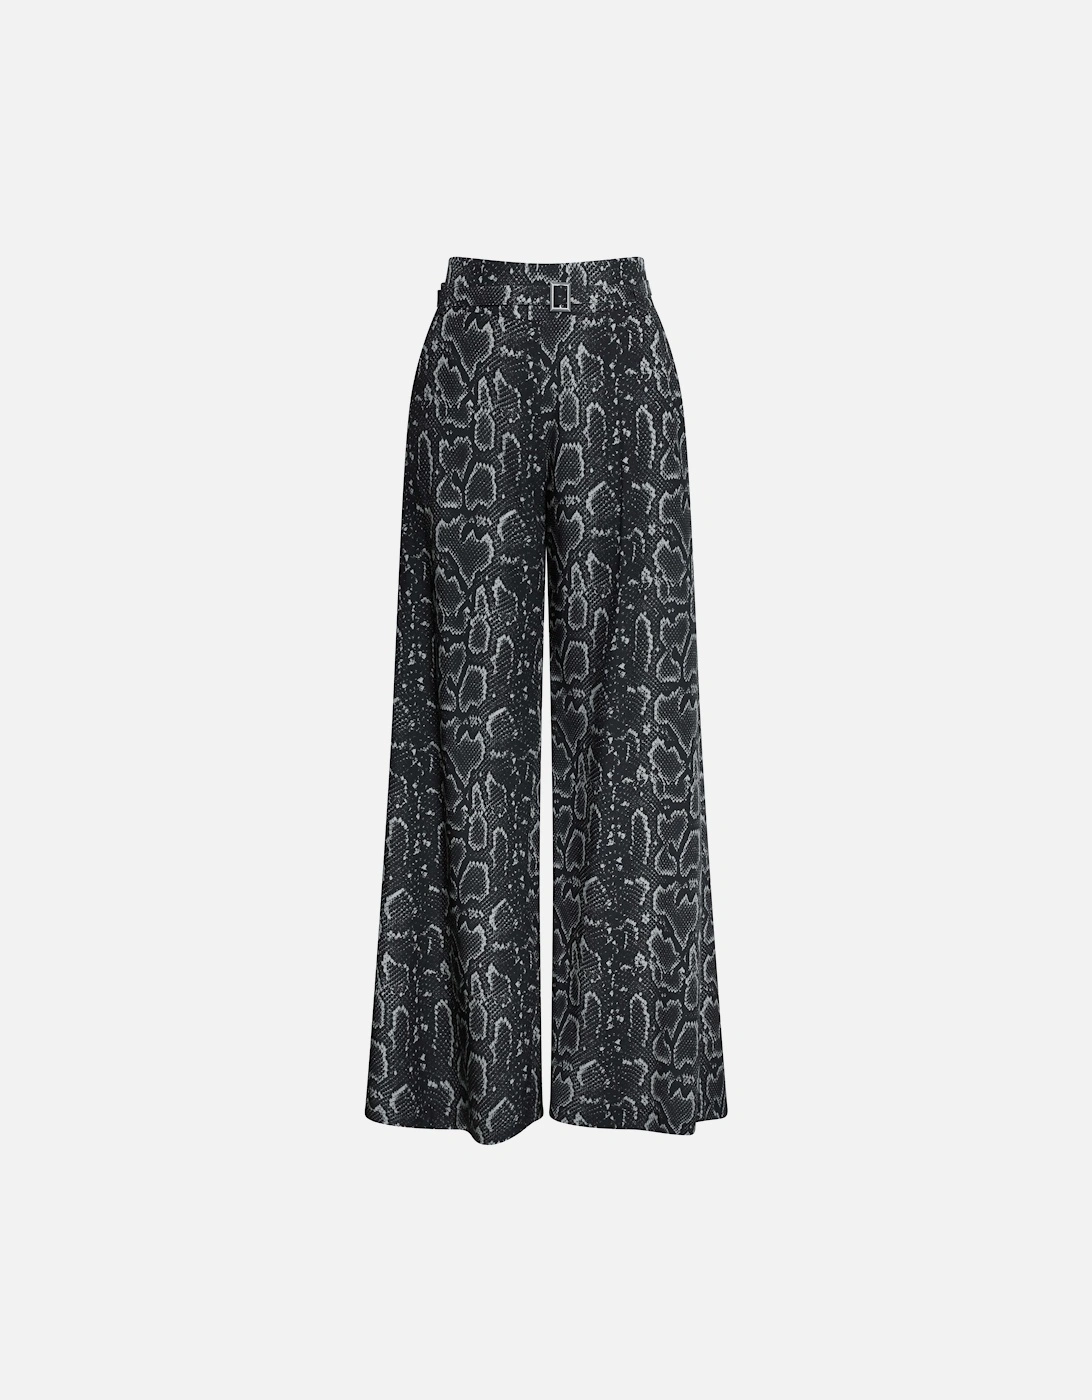 Python Print Trousers Black-Beige